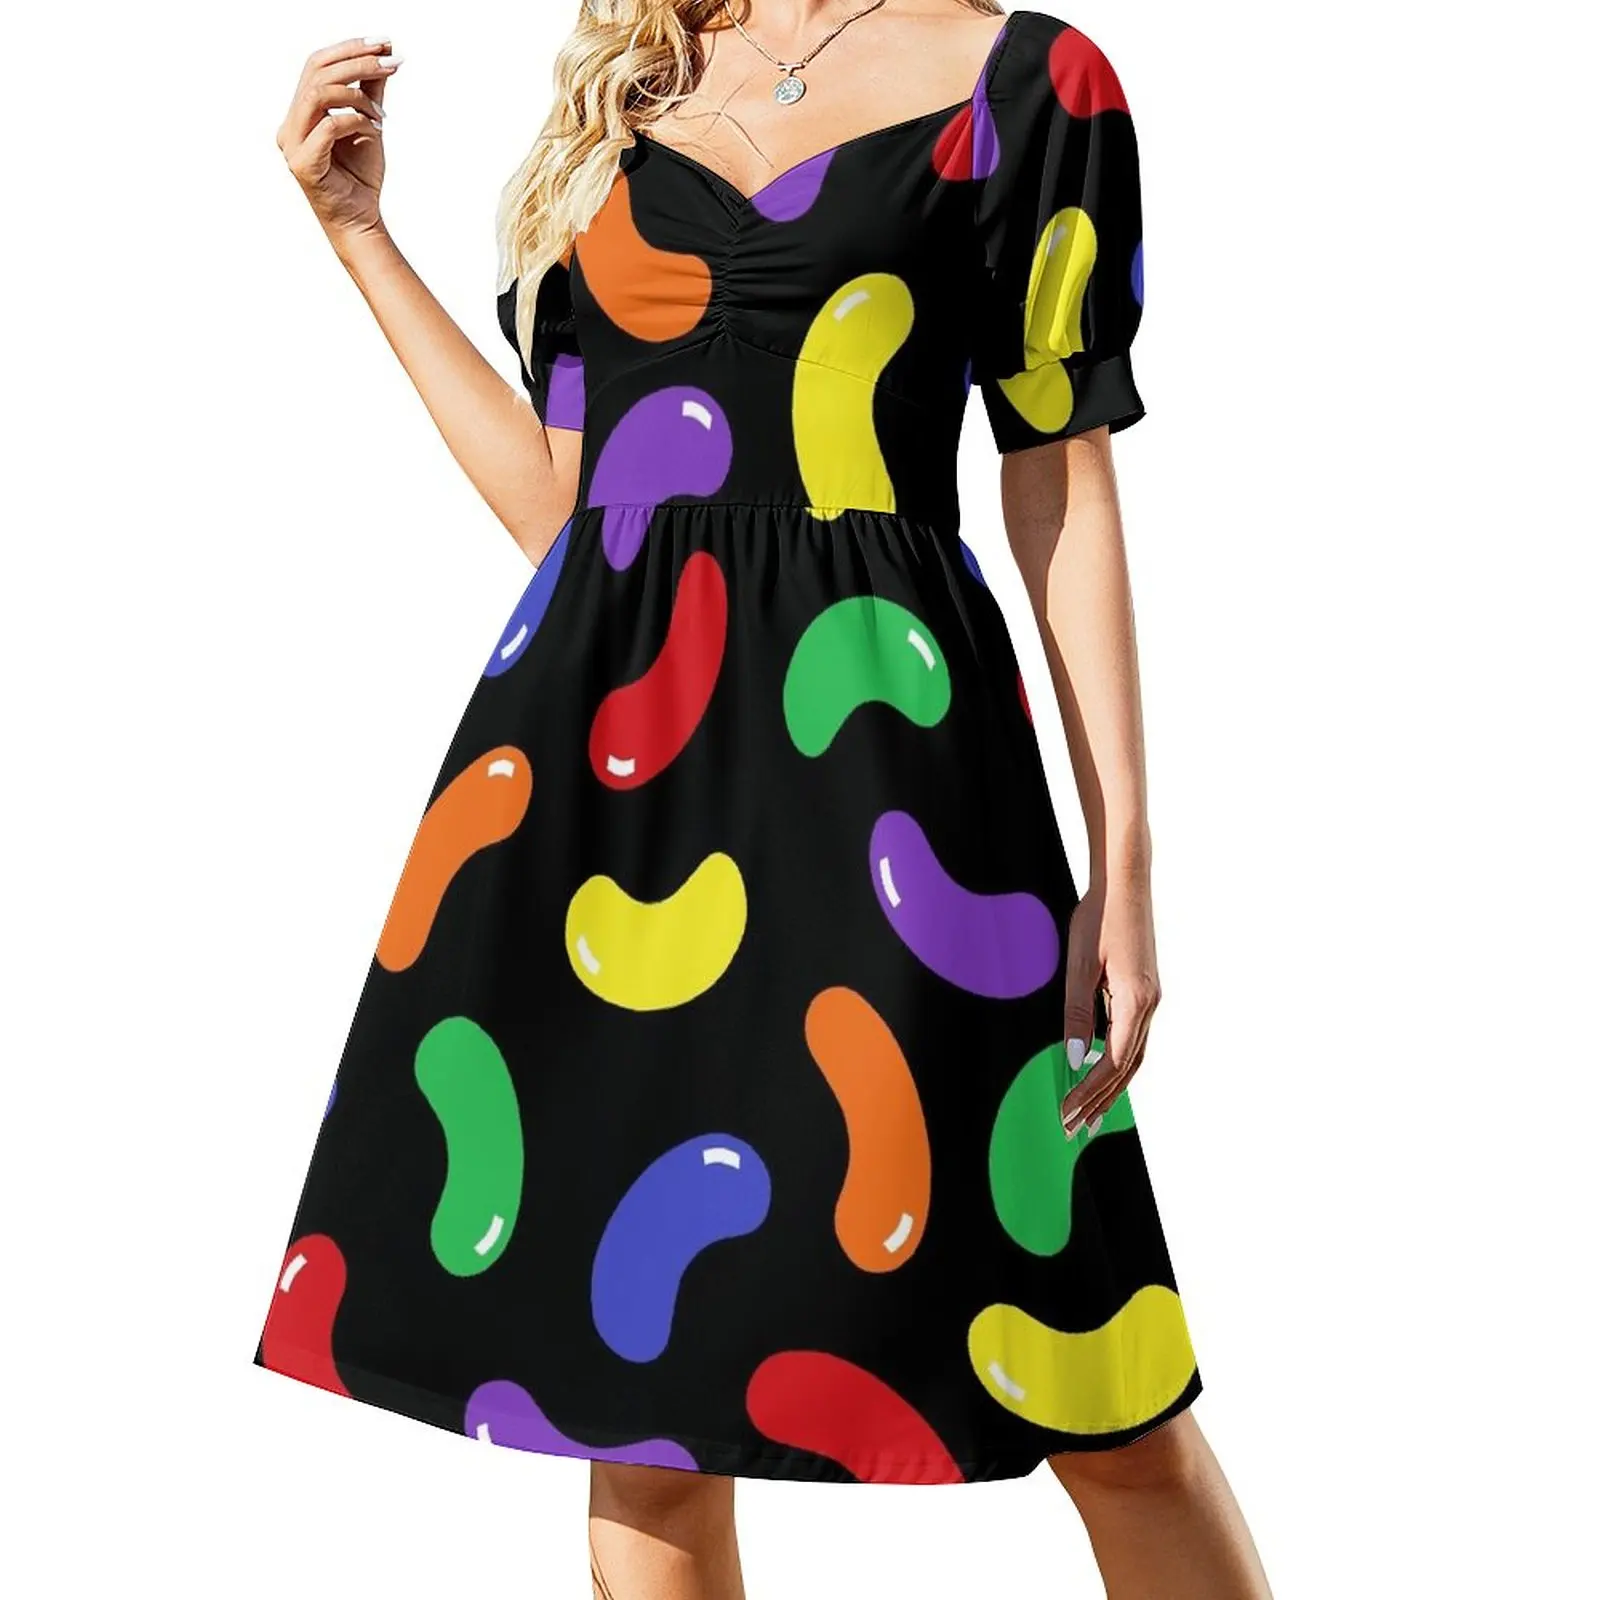 

Jelly Bean Pattern Sleeveless Dress women's evening dresses womans clothing